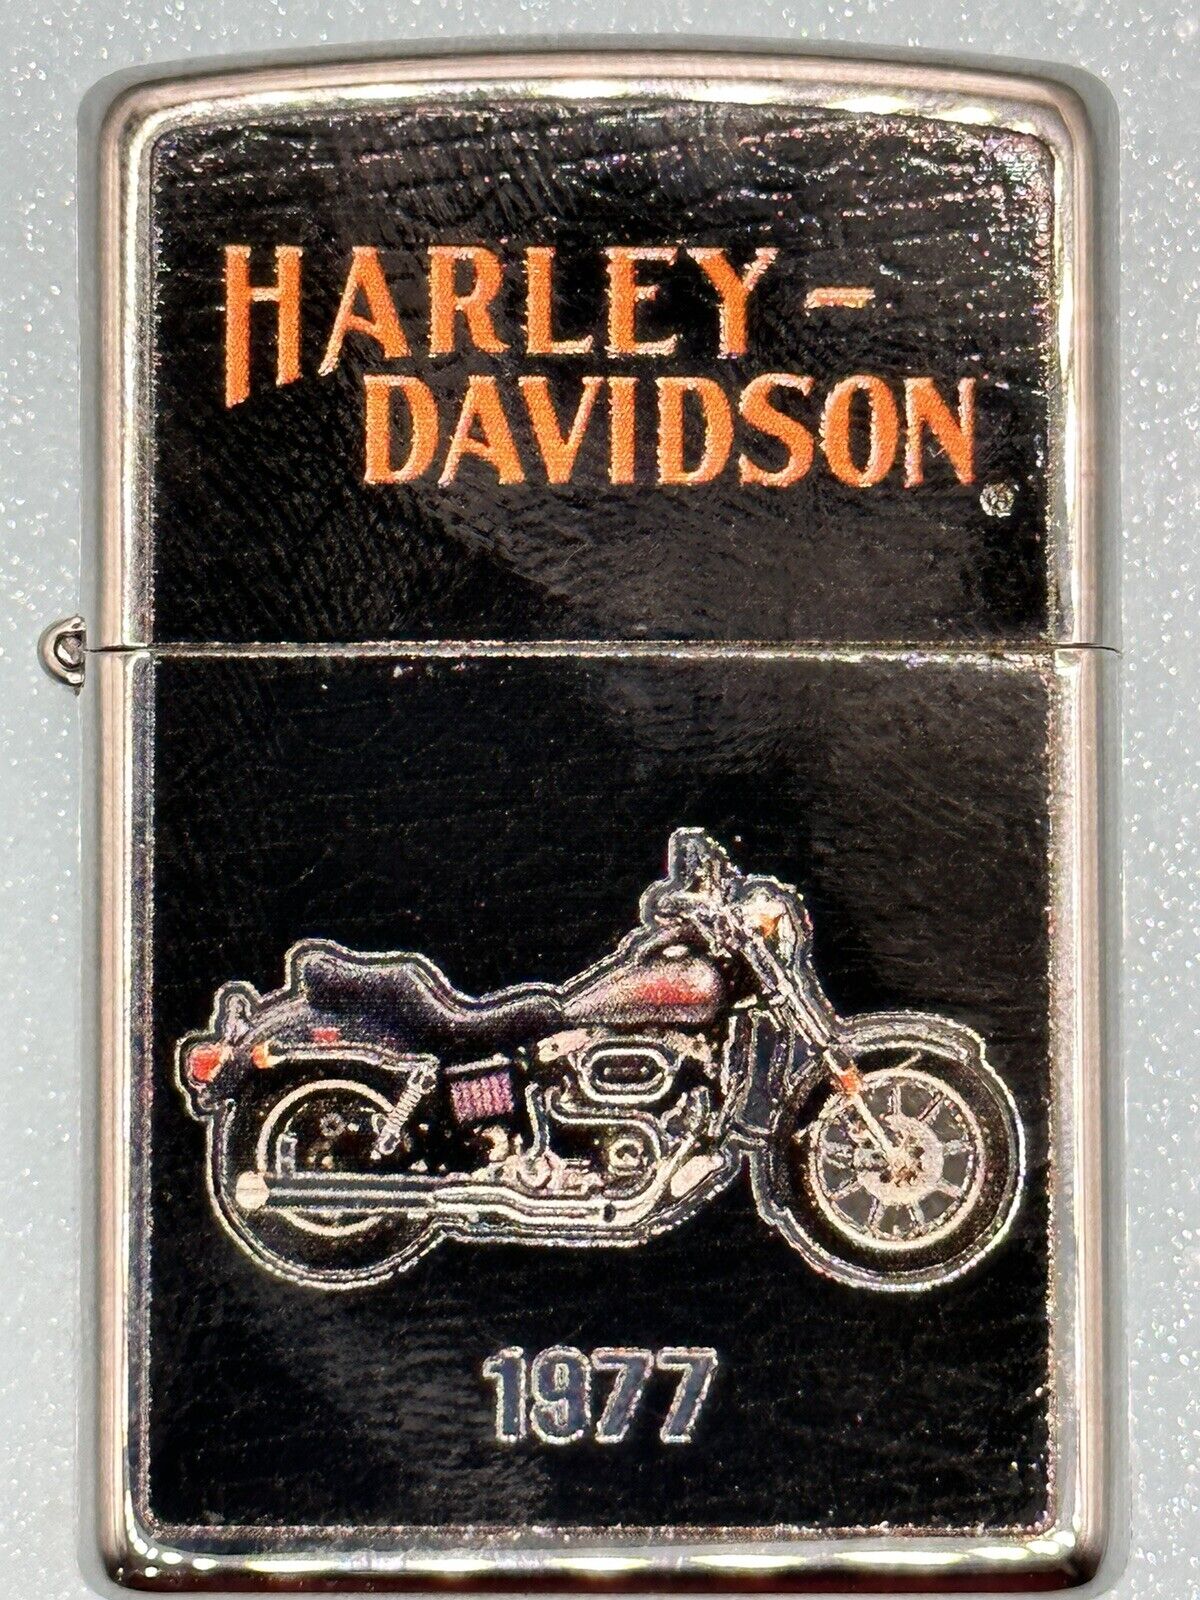 2016 Harley Davidson 1977 Motorcycle Chrome Zippo Lighter NEW